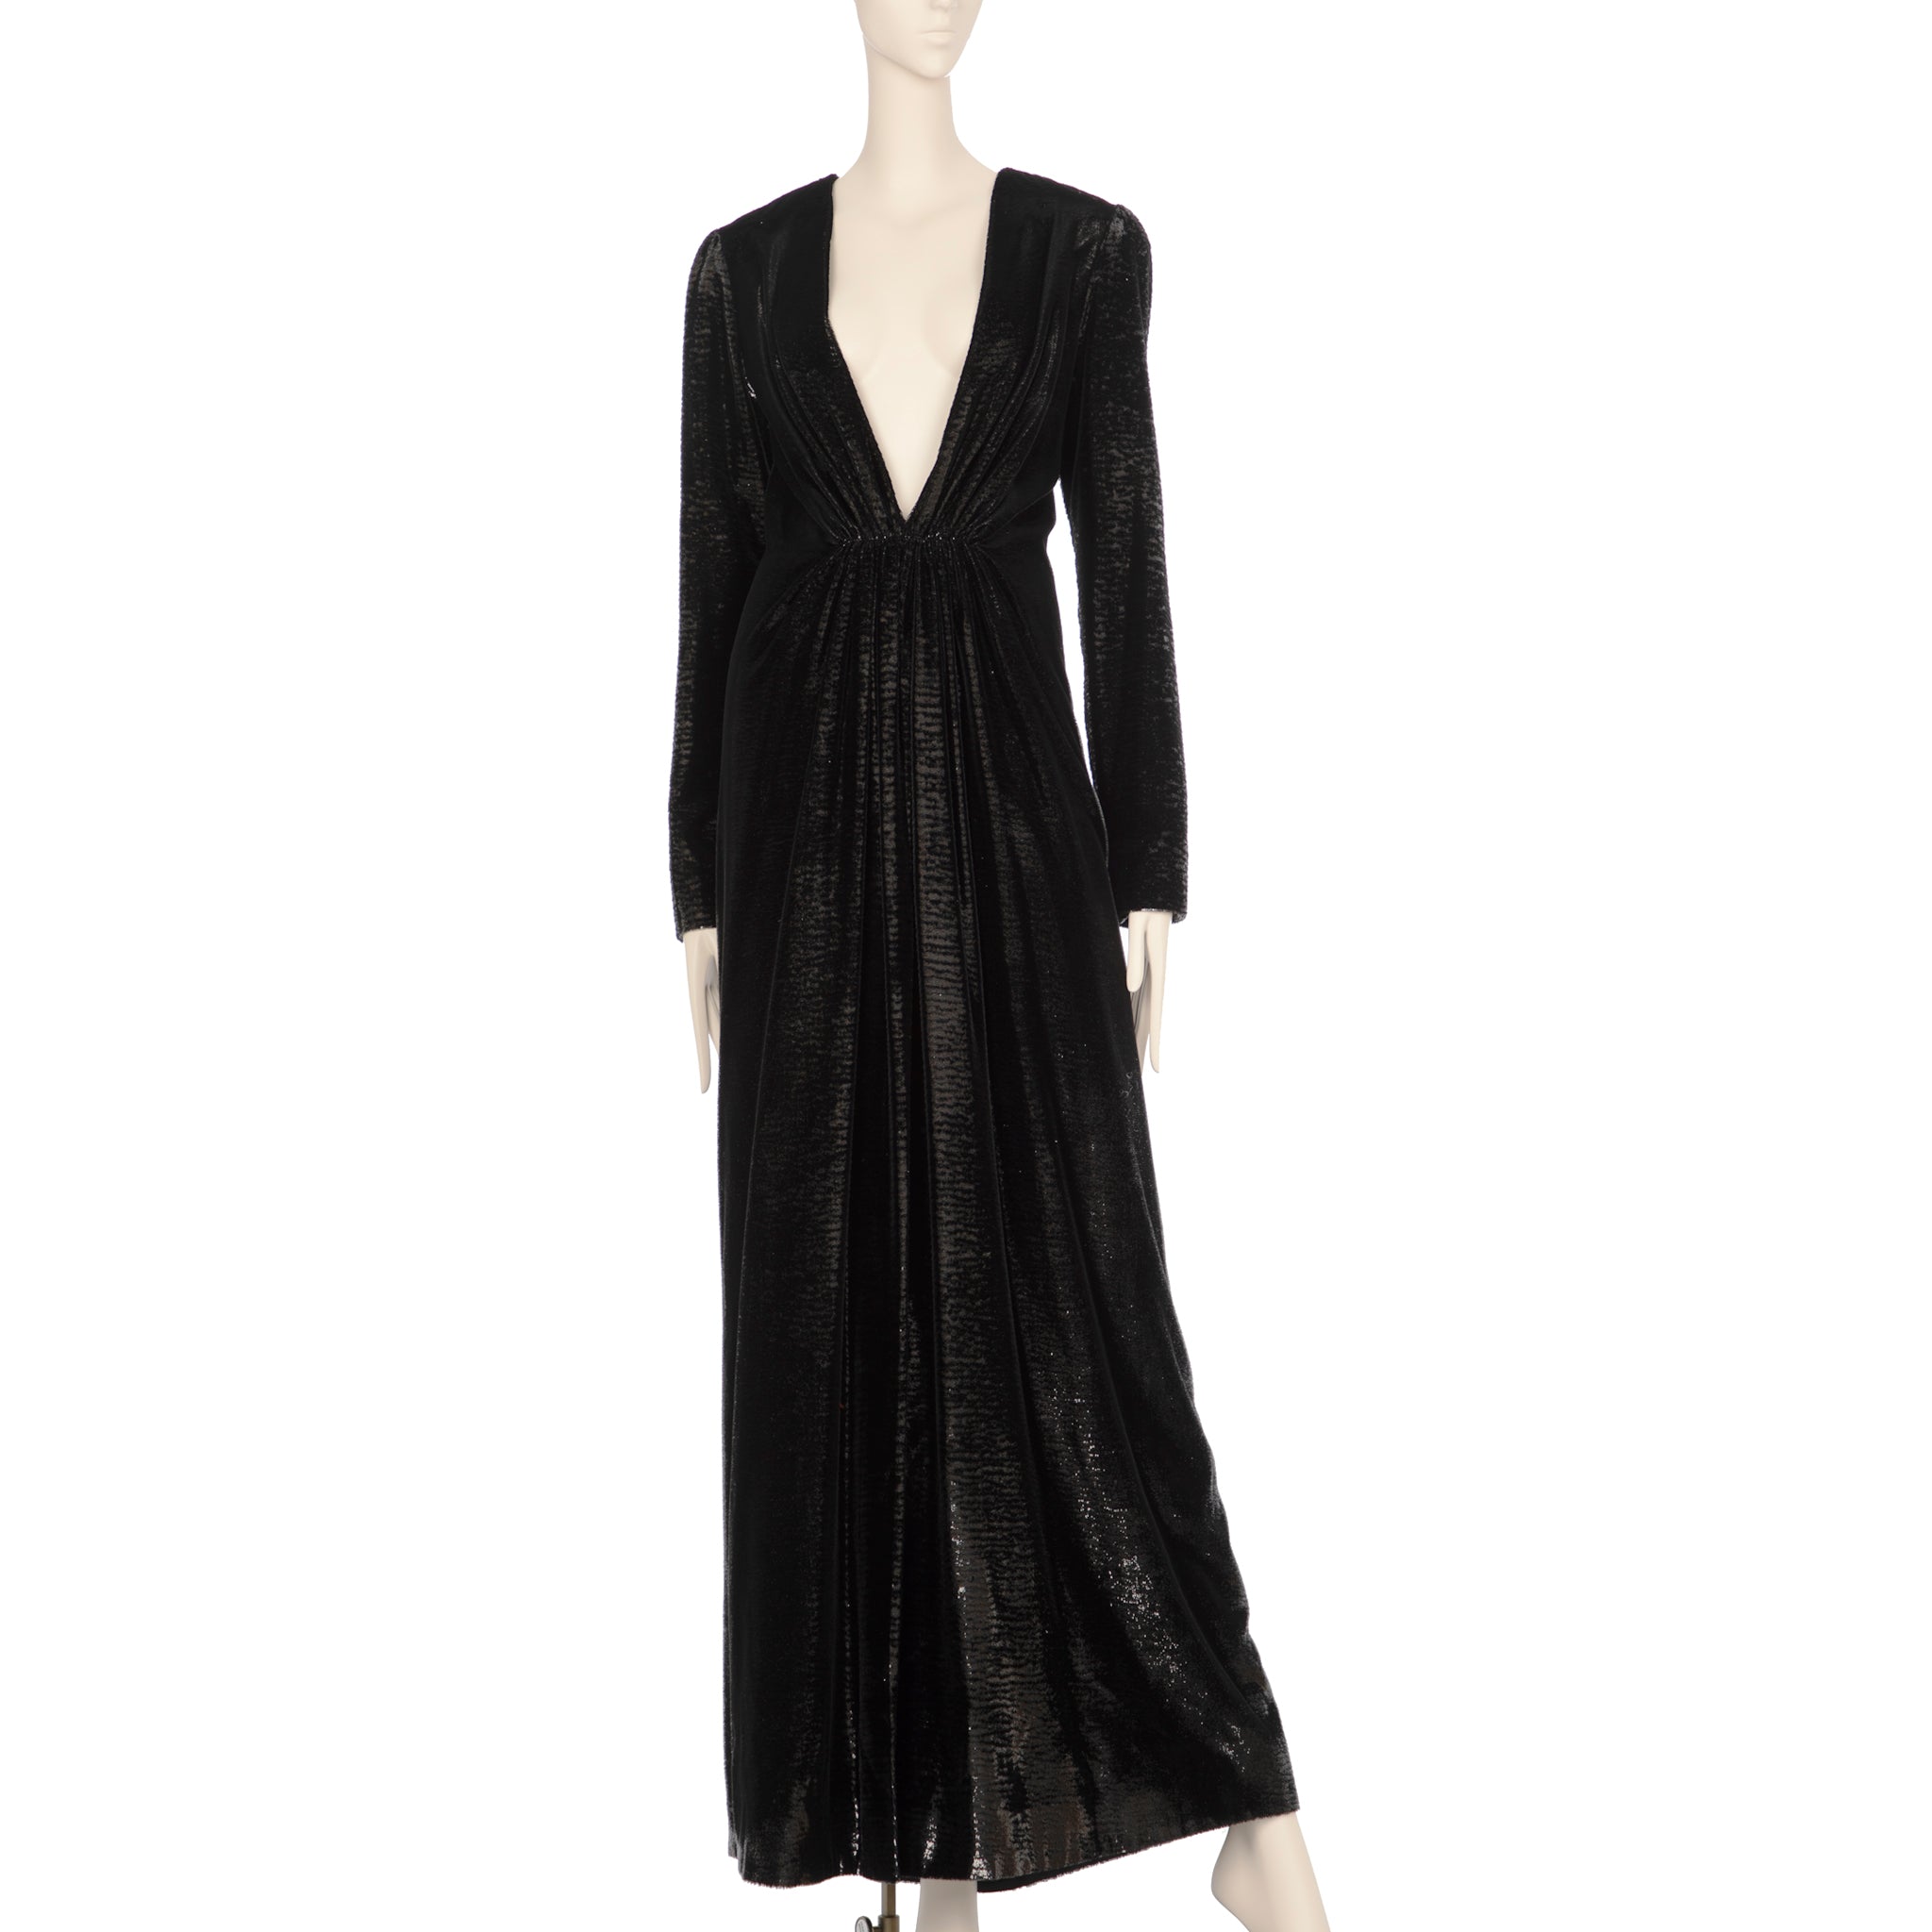 Saint Laurent Ankle Length Black Dress 36 FR